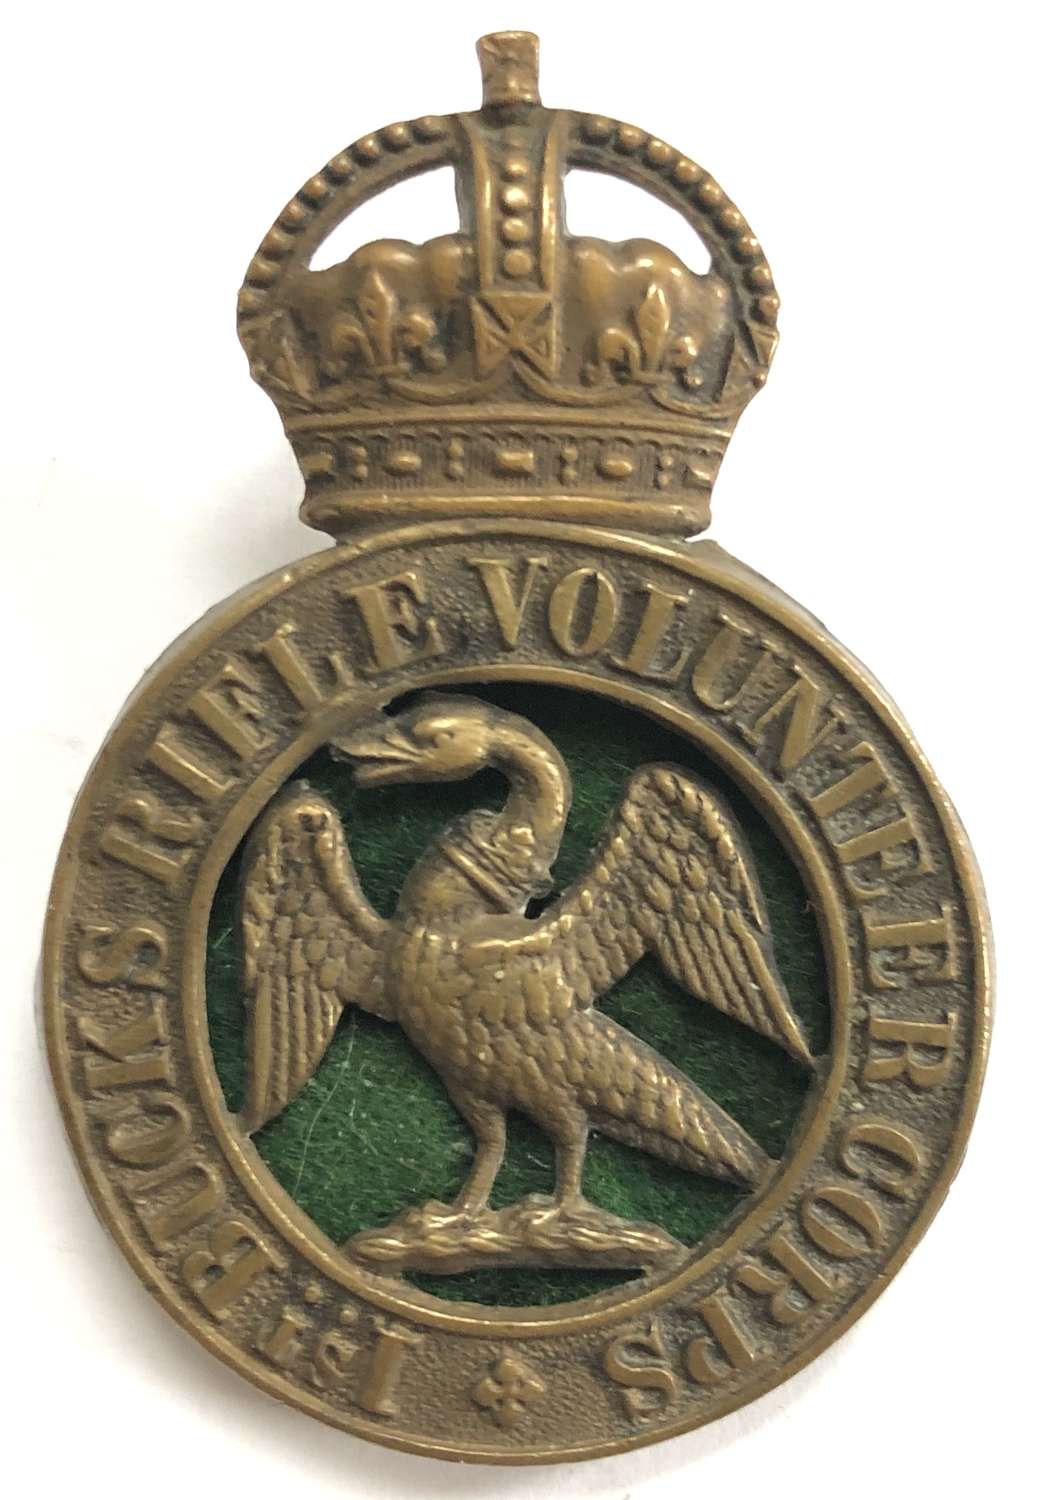 1st Bucks Rifle Volunteer Corps slouch hat badge circa 1902-08